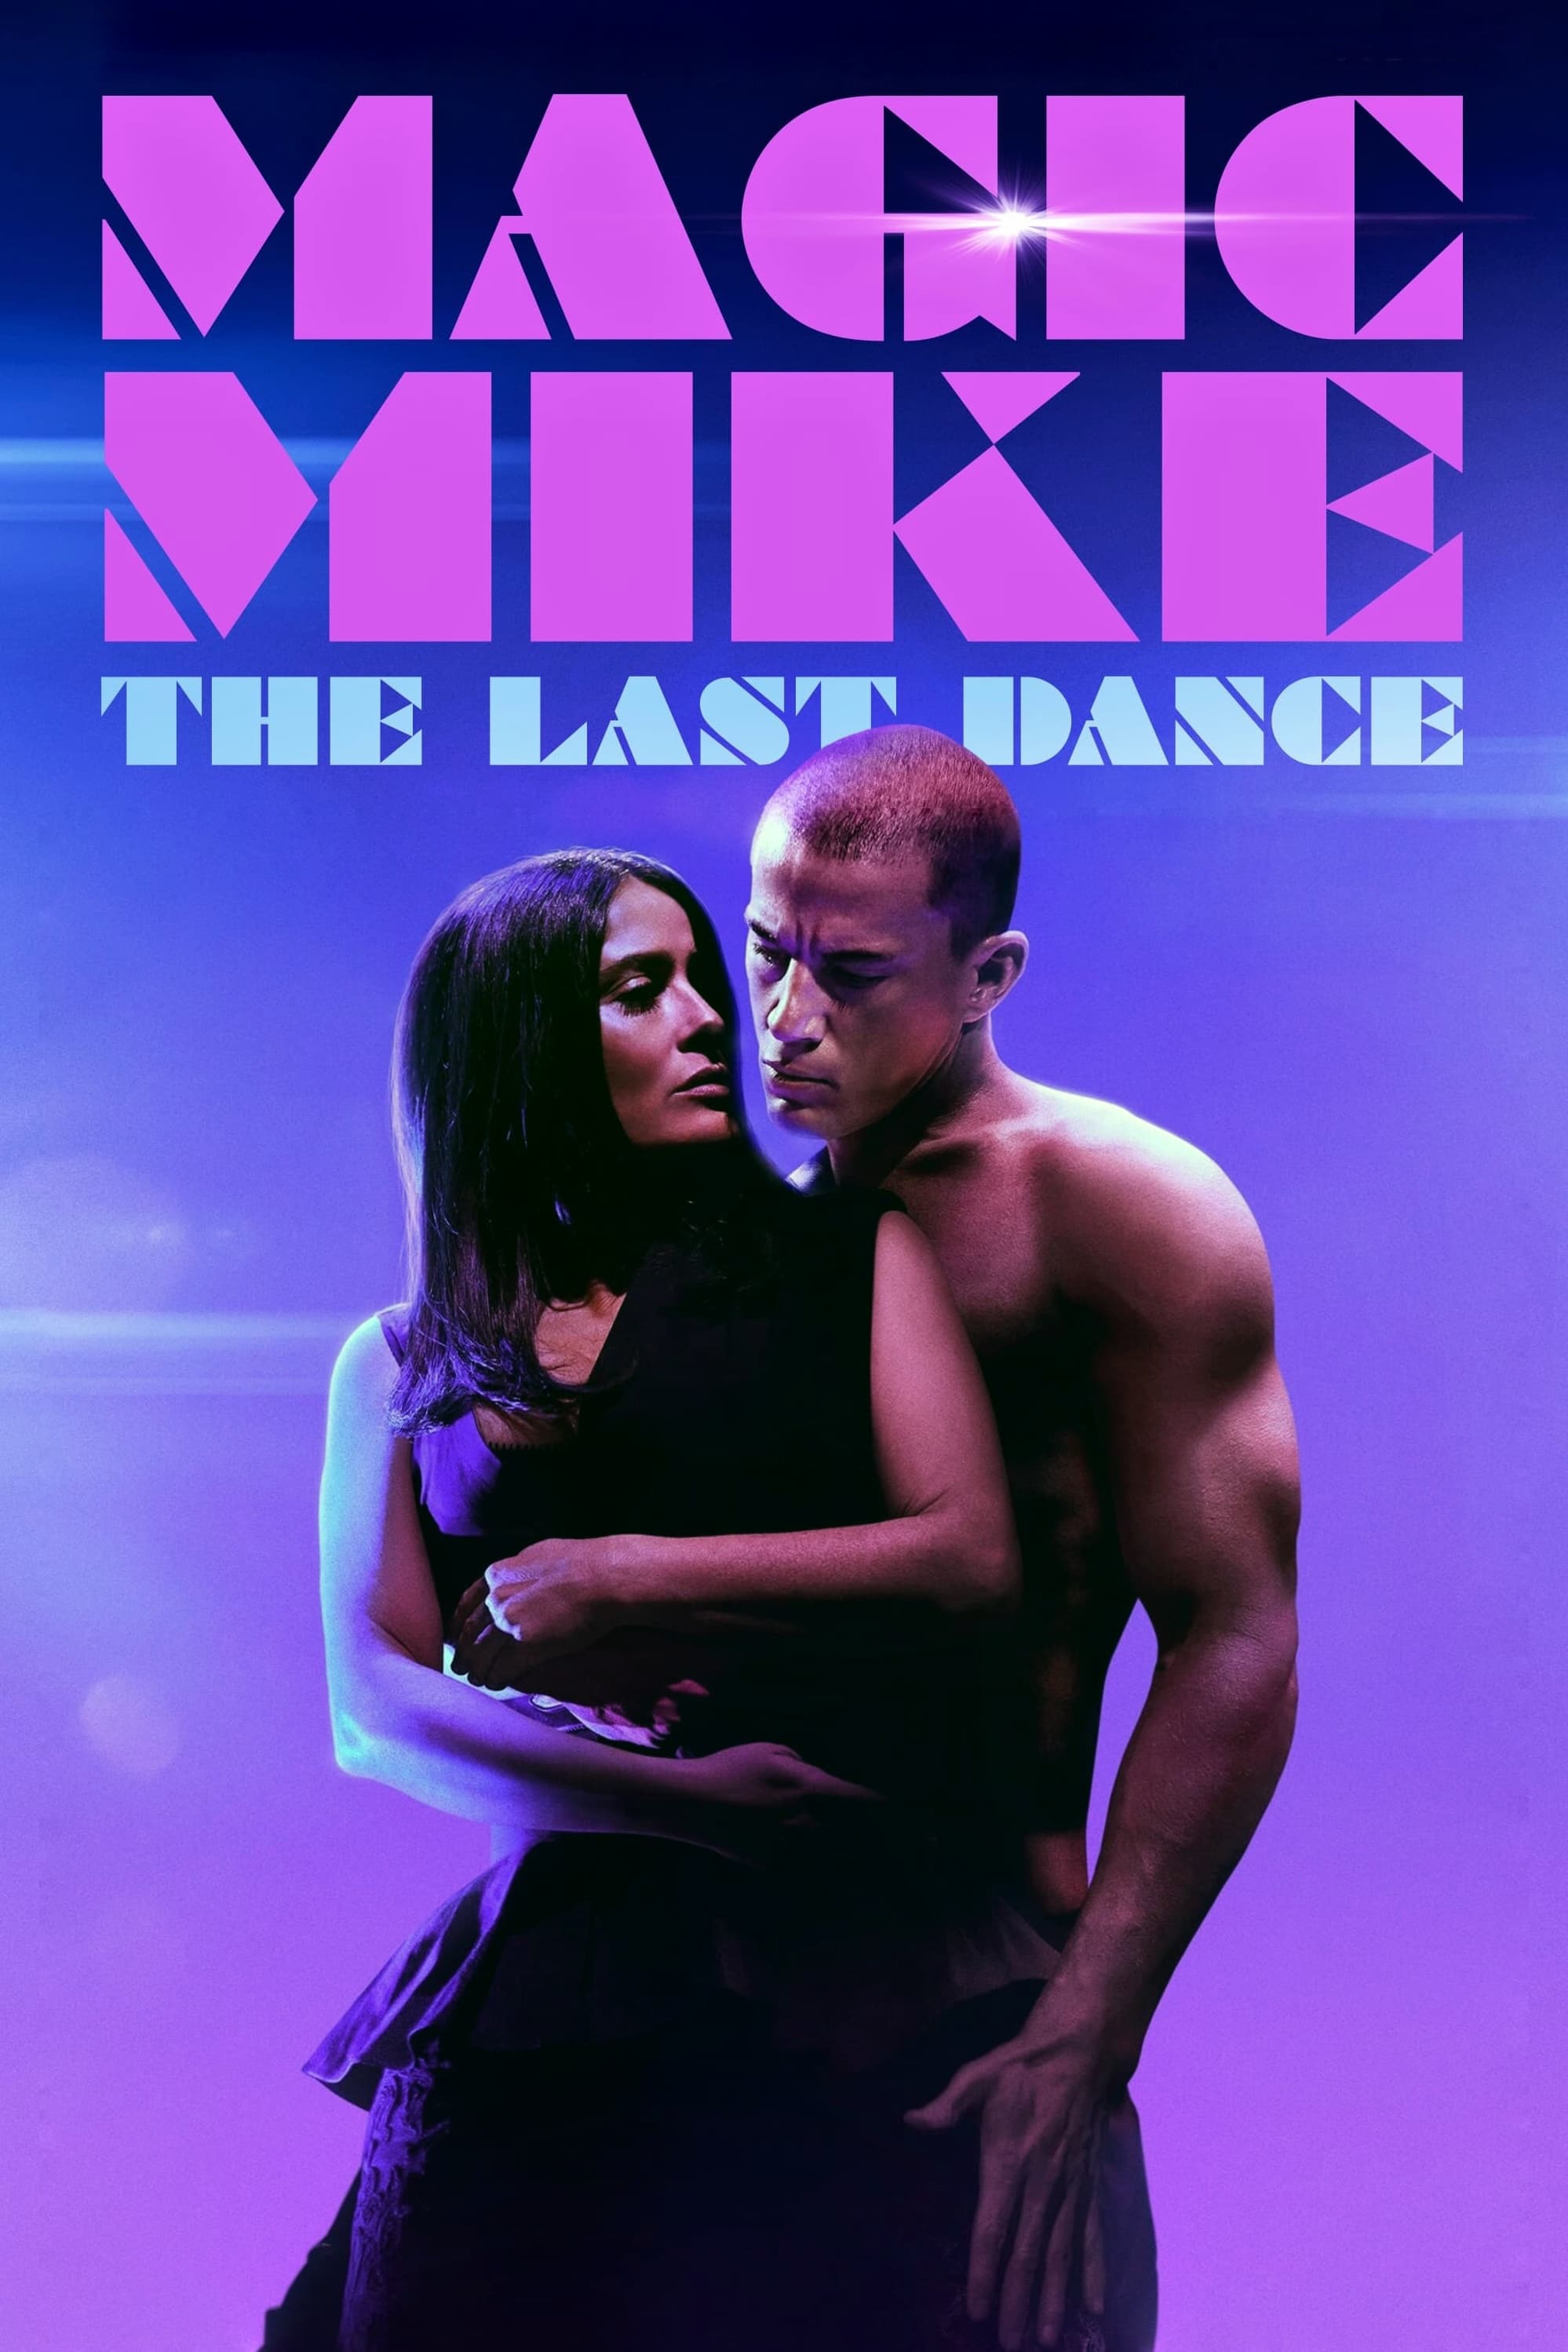 Magic Mike - The Last Dance film